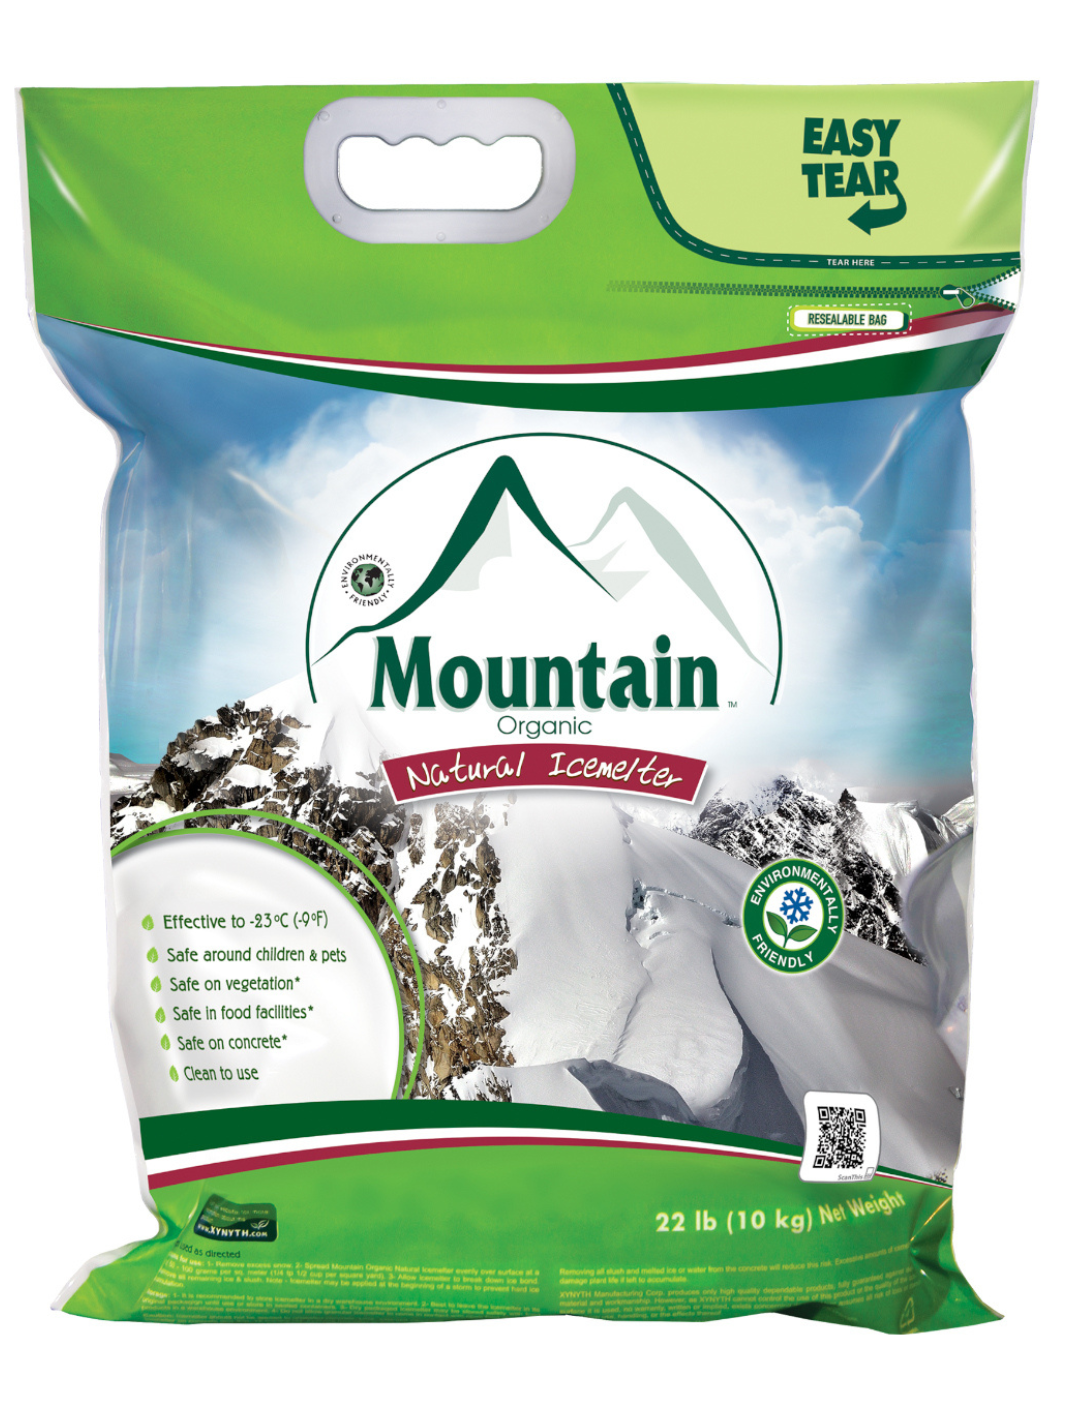 22lb Bag of Mountain Organic Natural™ Icemelter